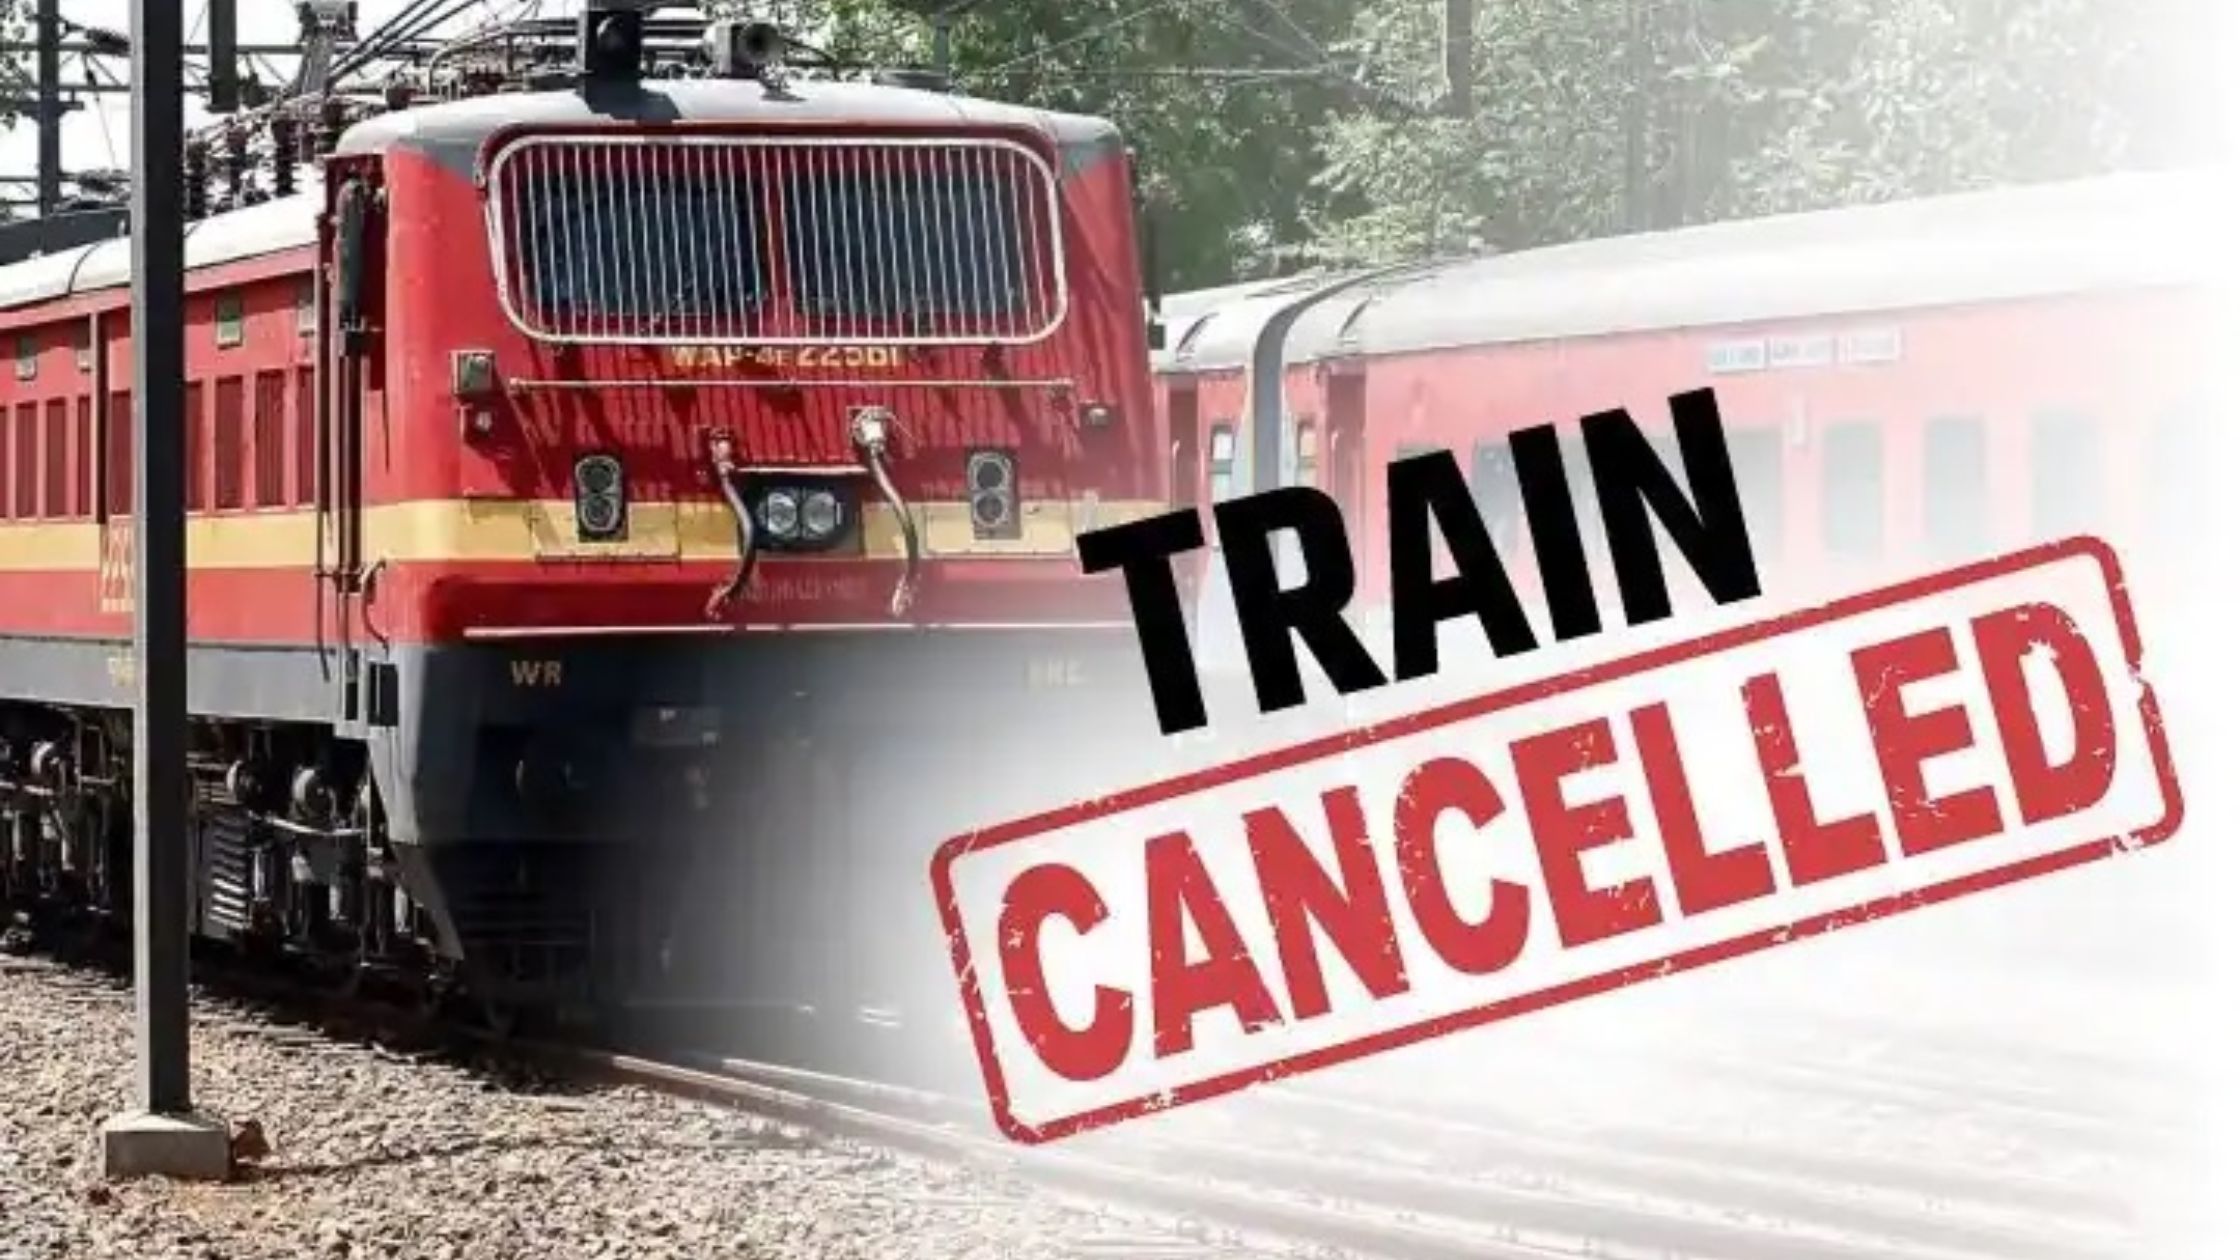 Many trains of Bihar canceled due to derailment